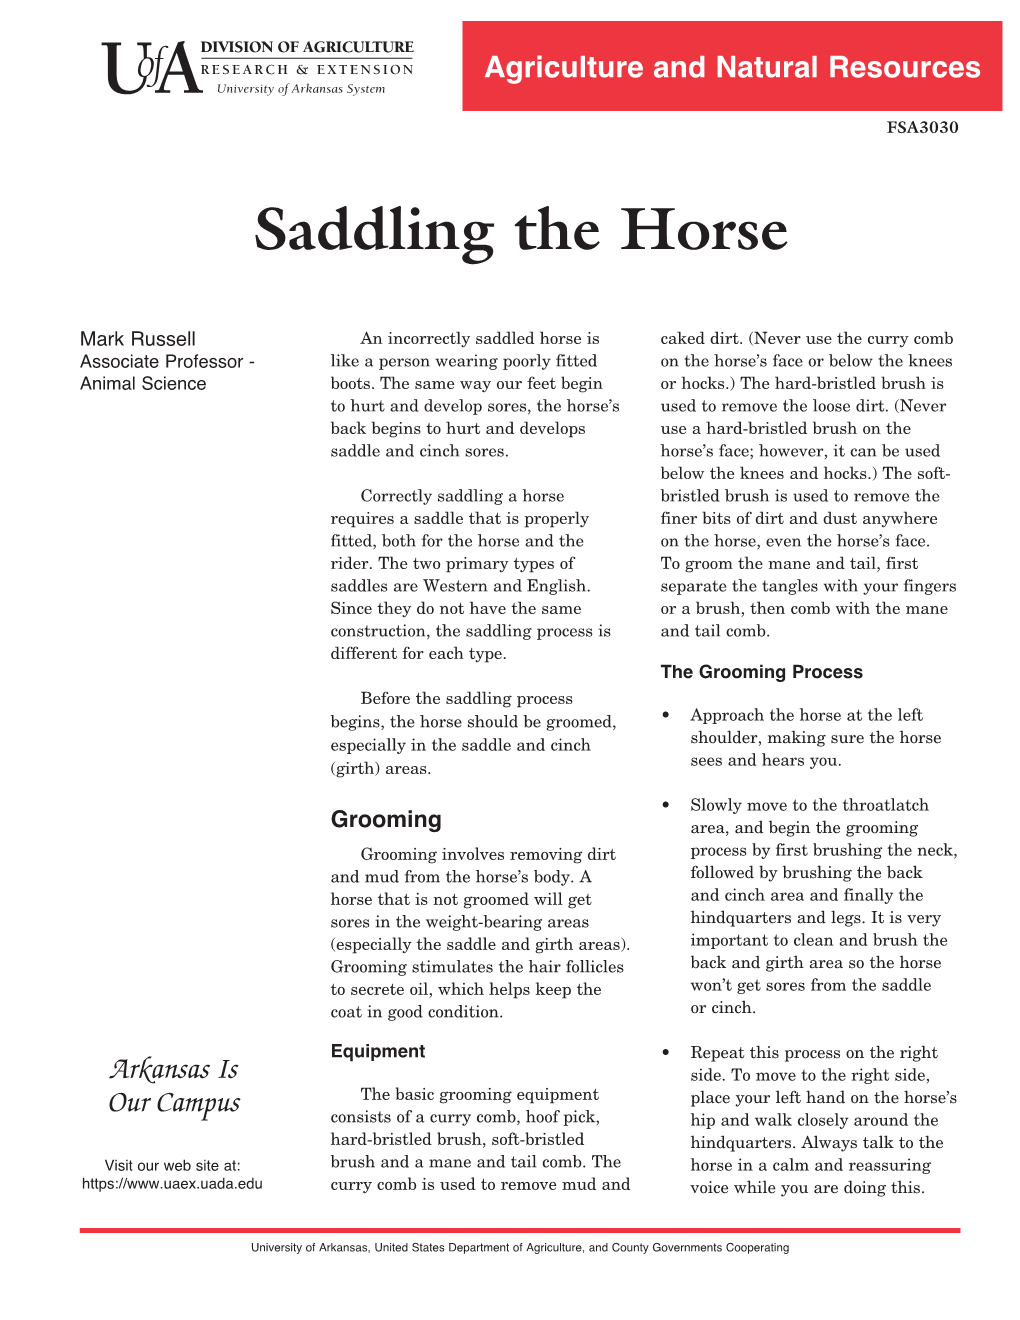 Saddling the Horse FSA3030